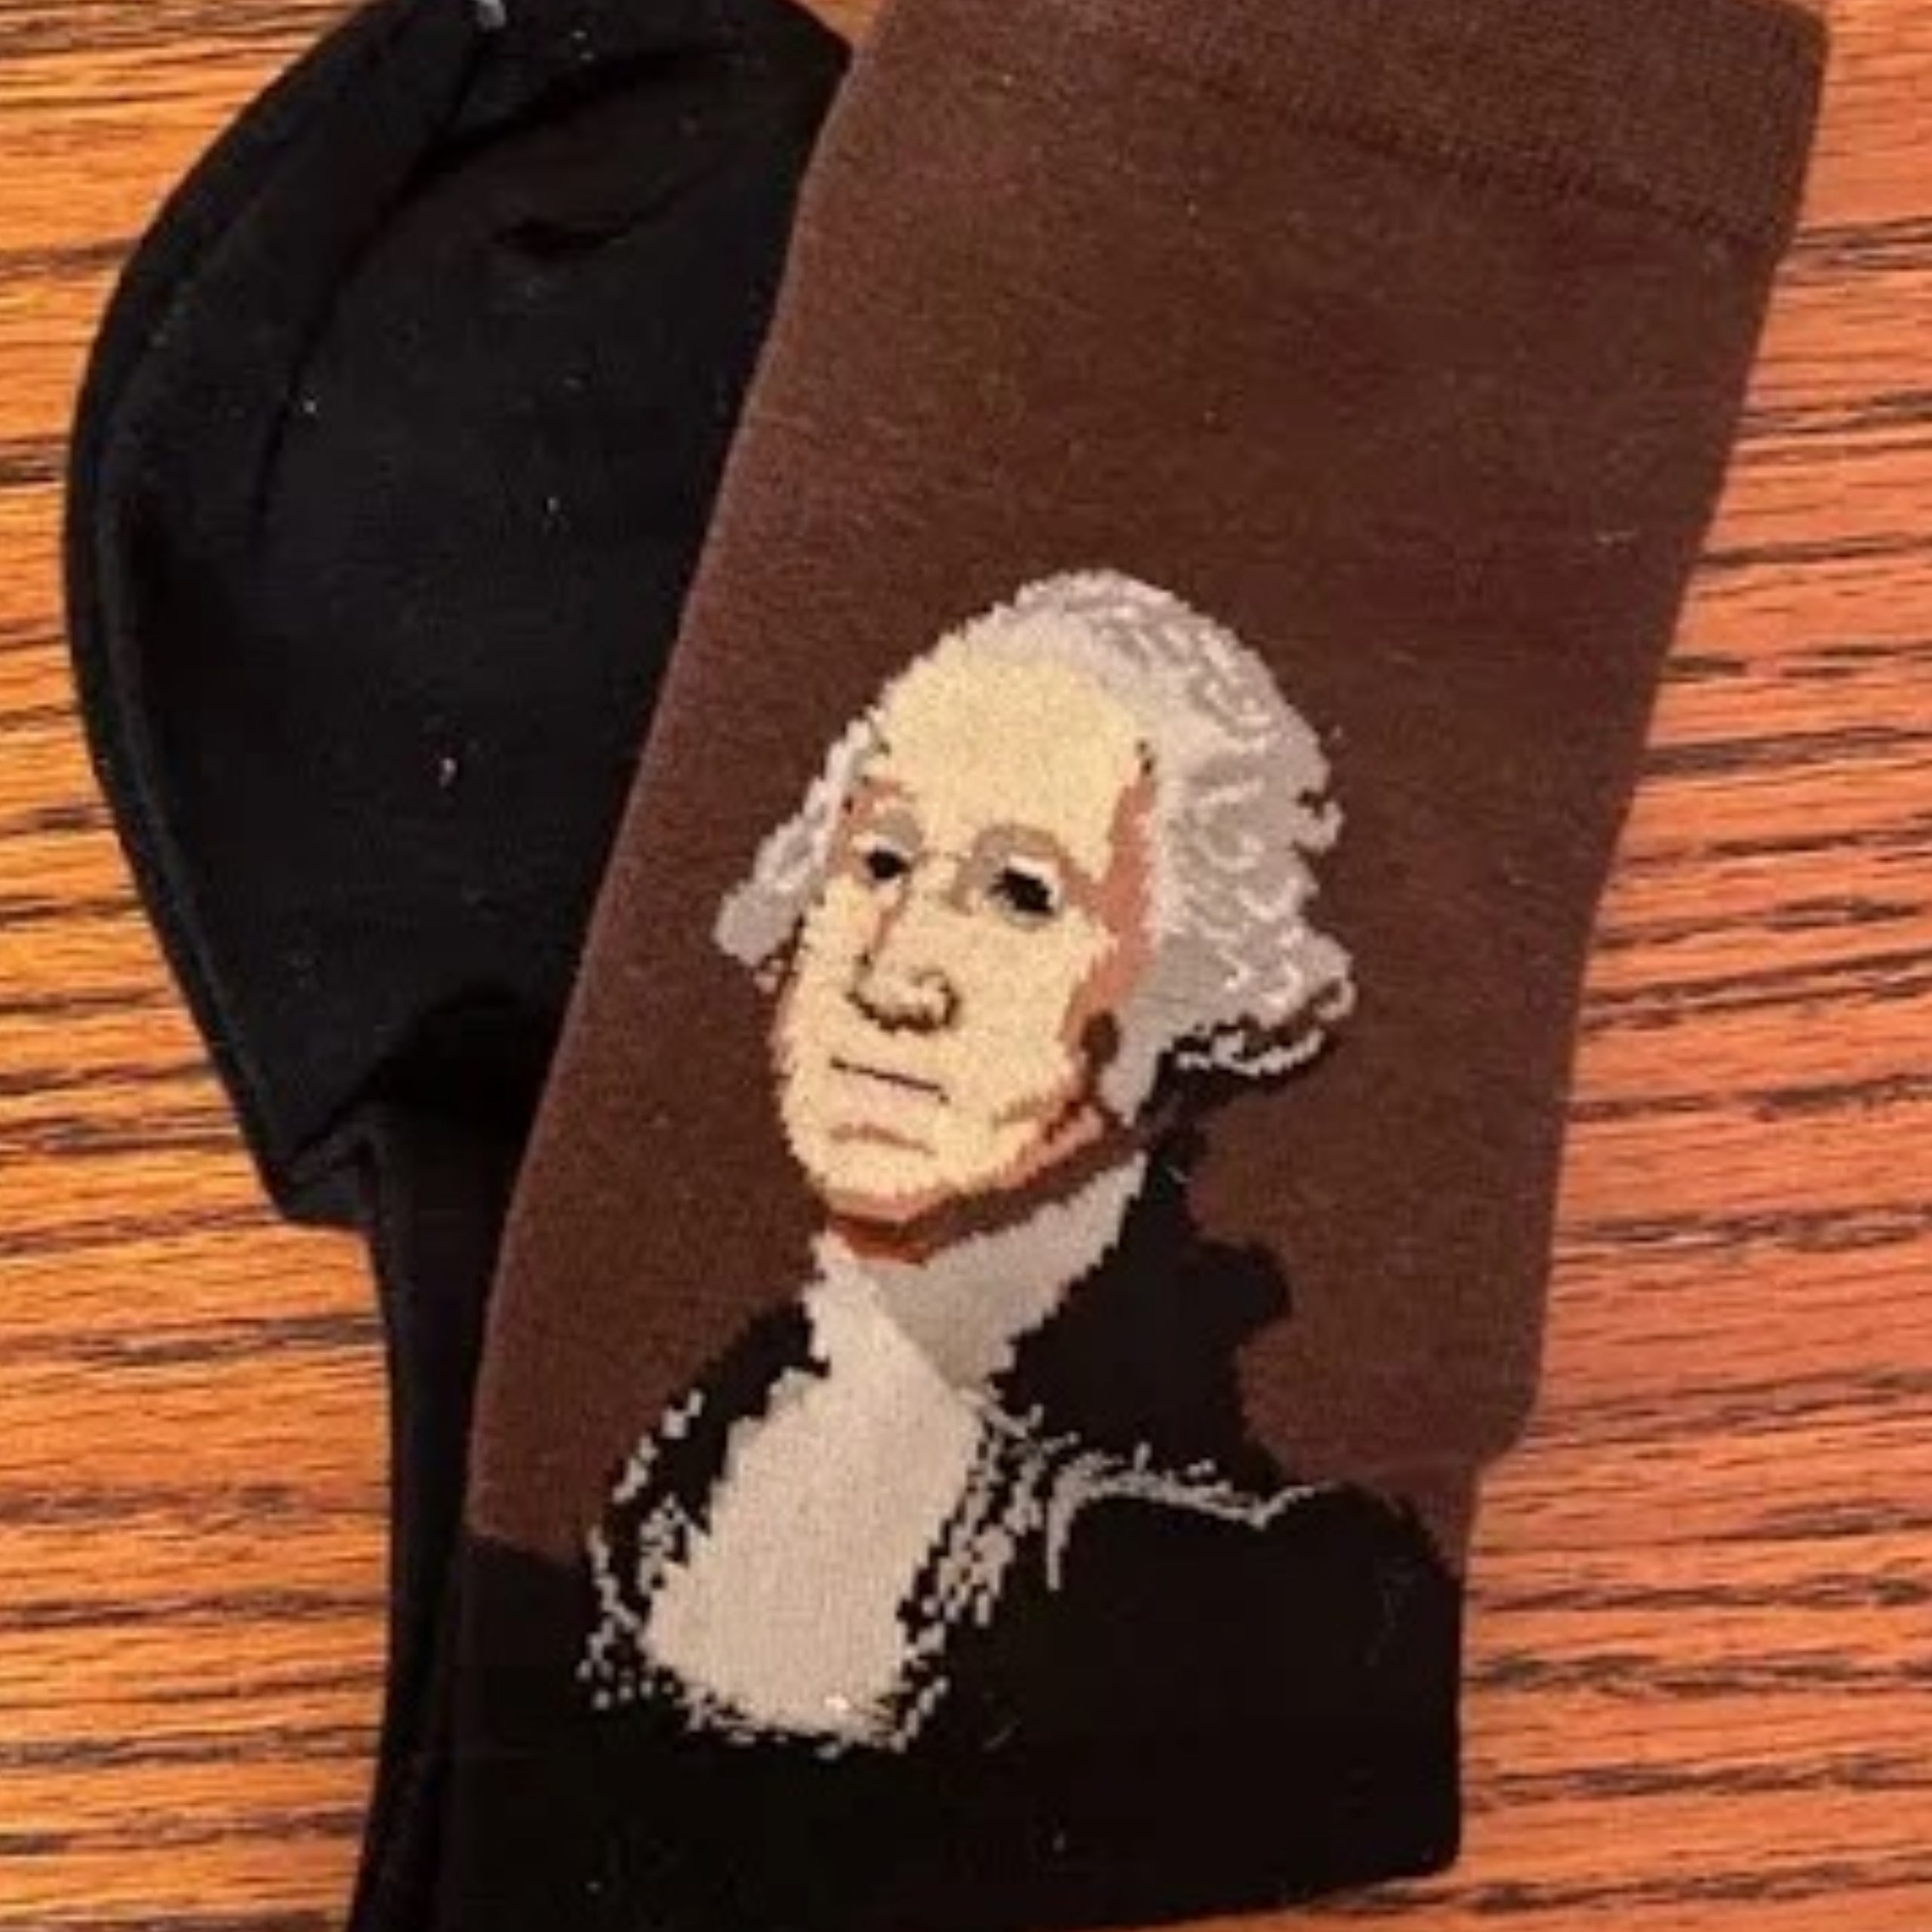 George Washington Socks from the Sock Panda